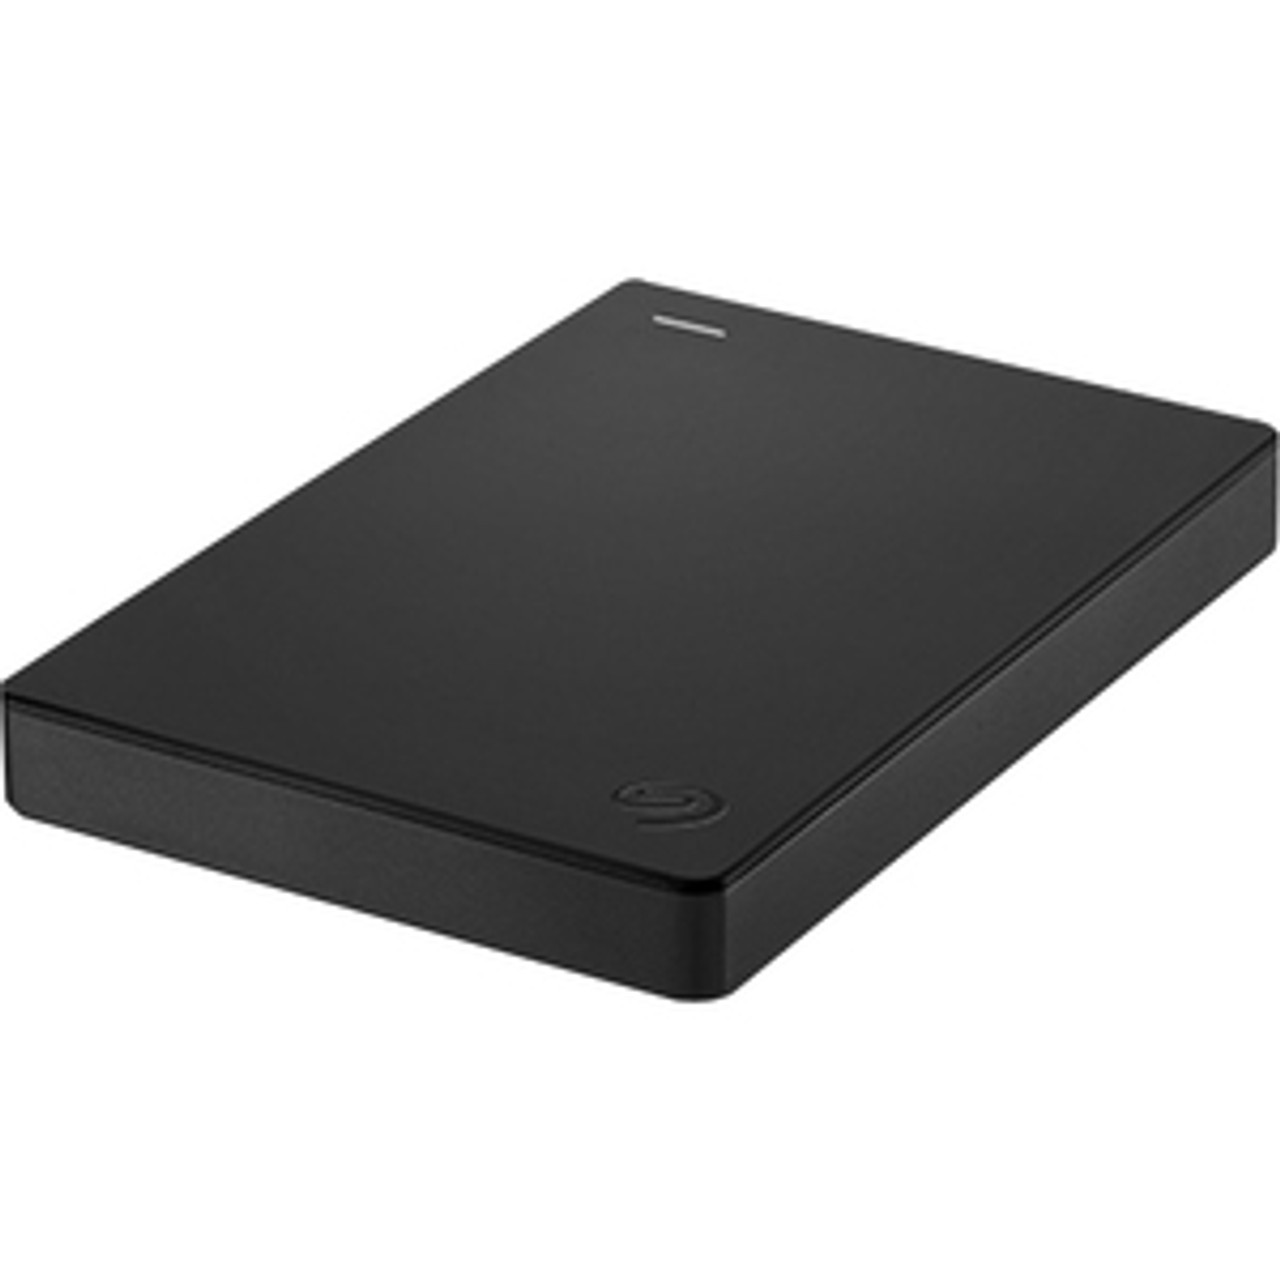 STDS1000100 Backup Plus Slim Portable Drive for Mac USB 3.0 1TB